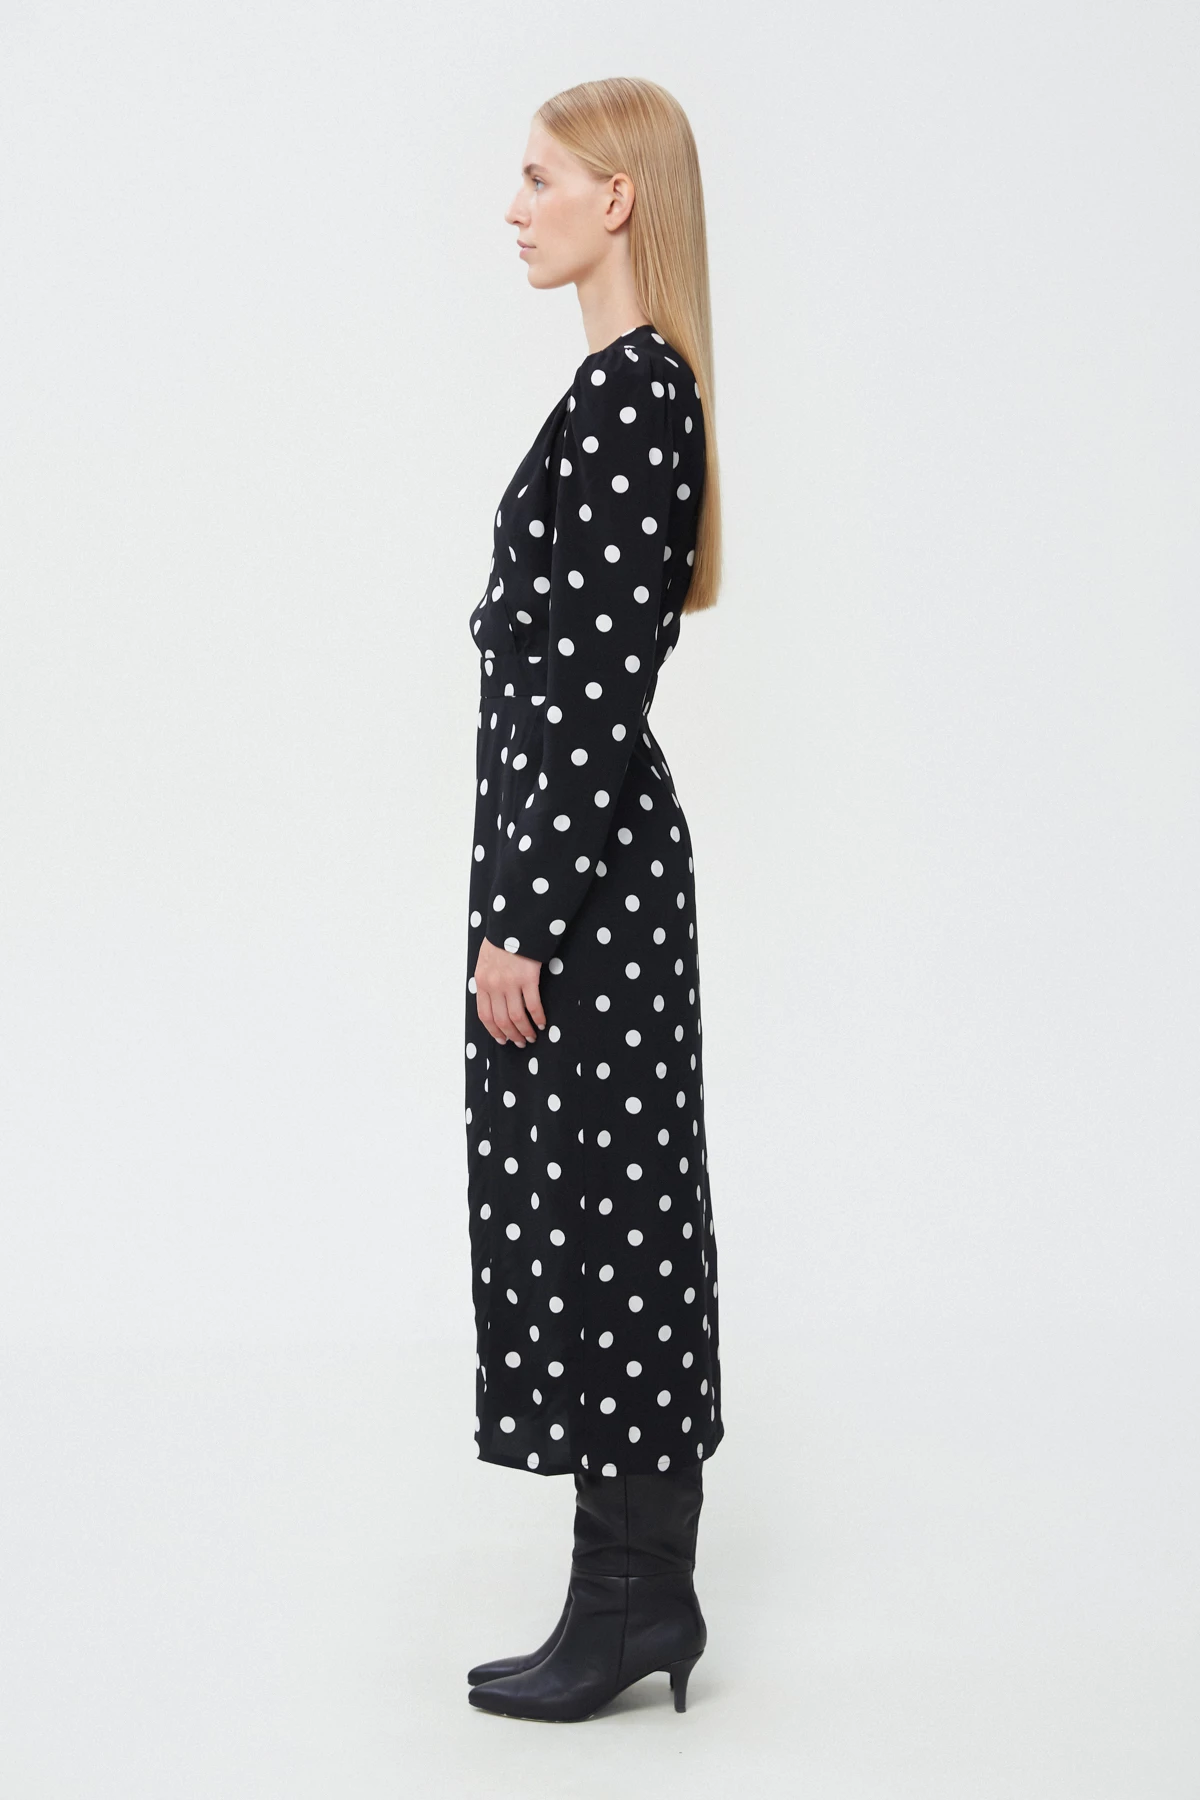 Black viscose midi dress with polka dot print, photo 4